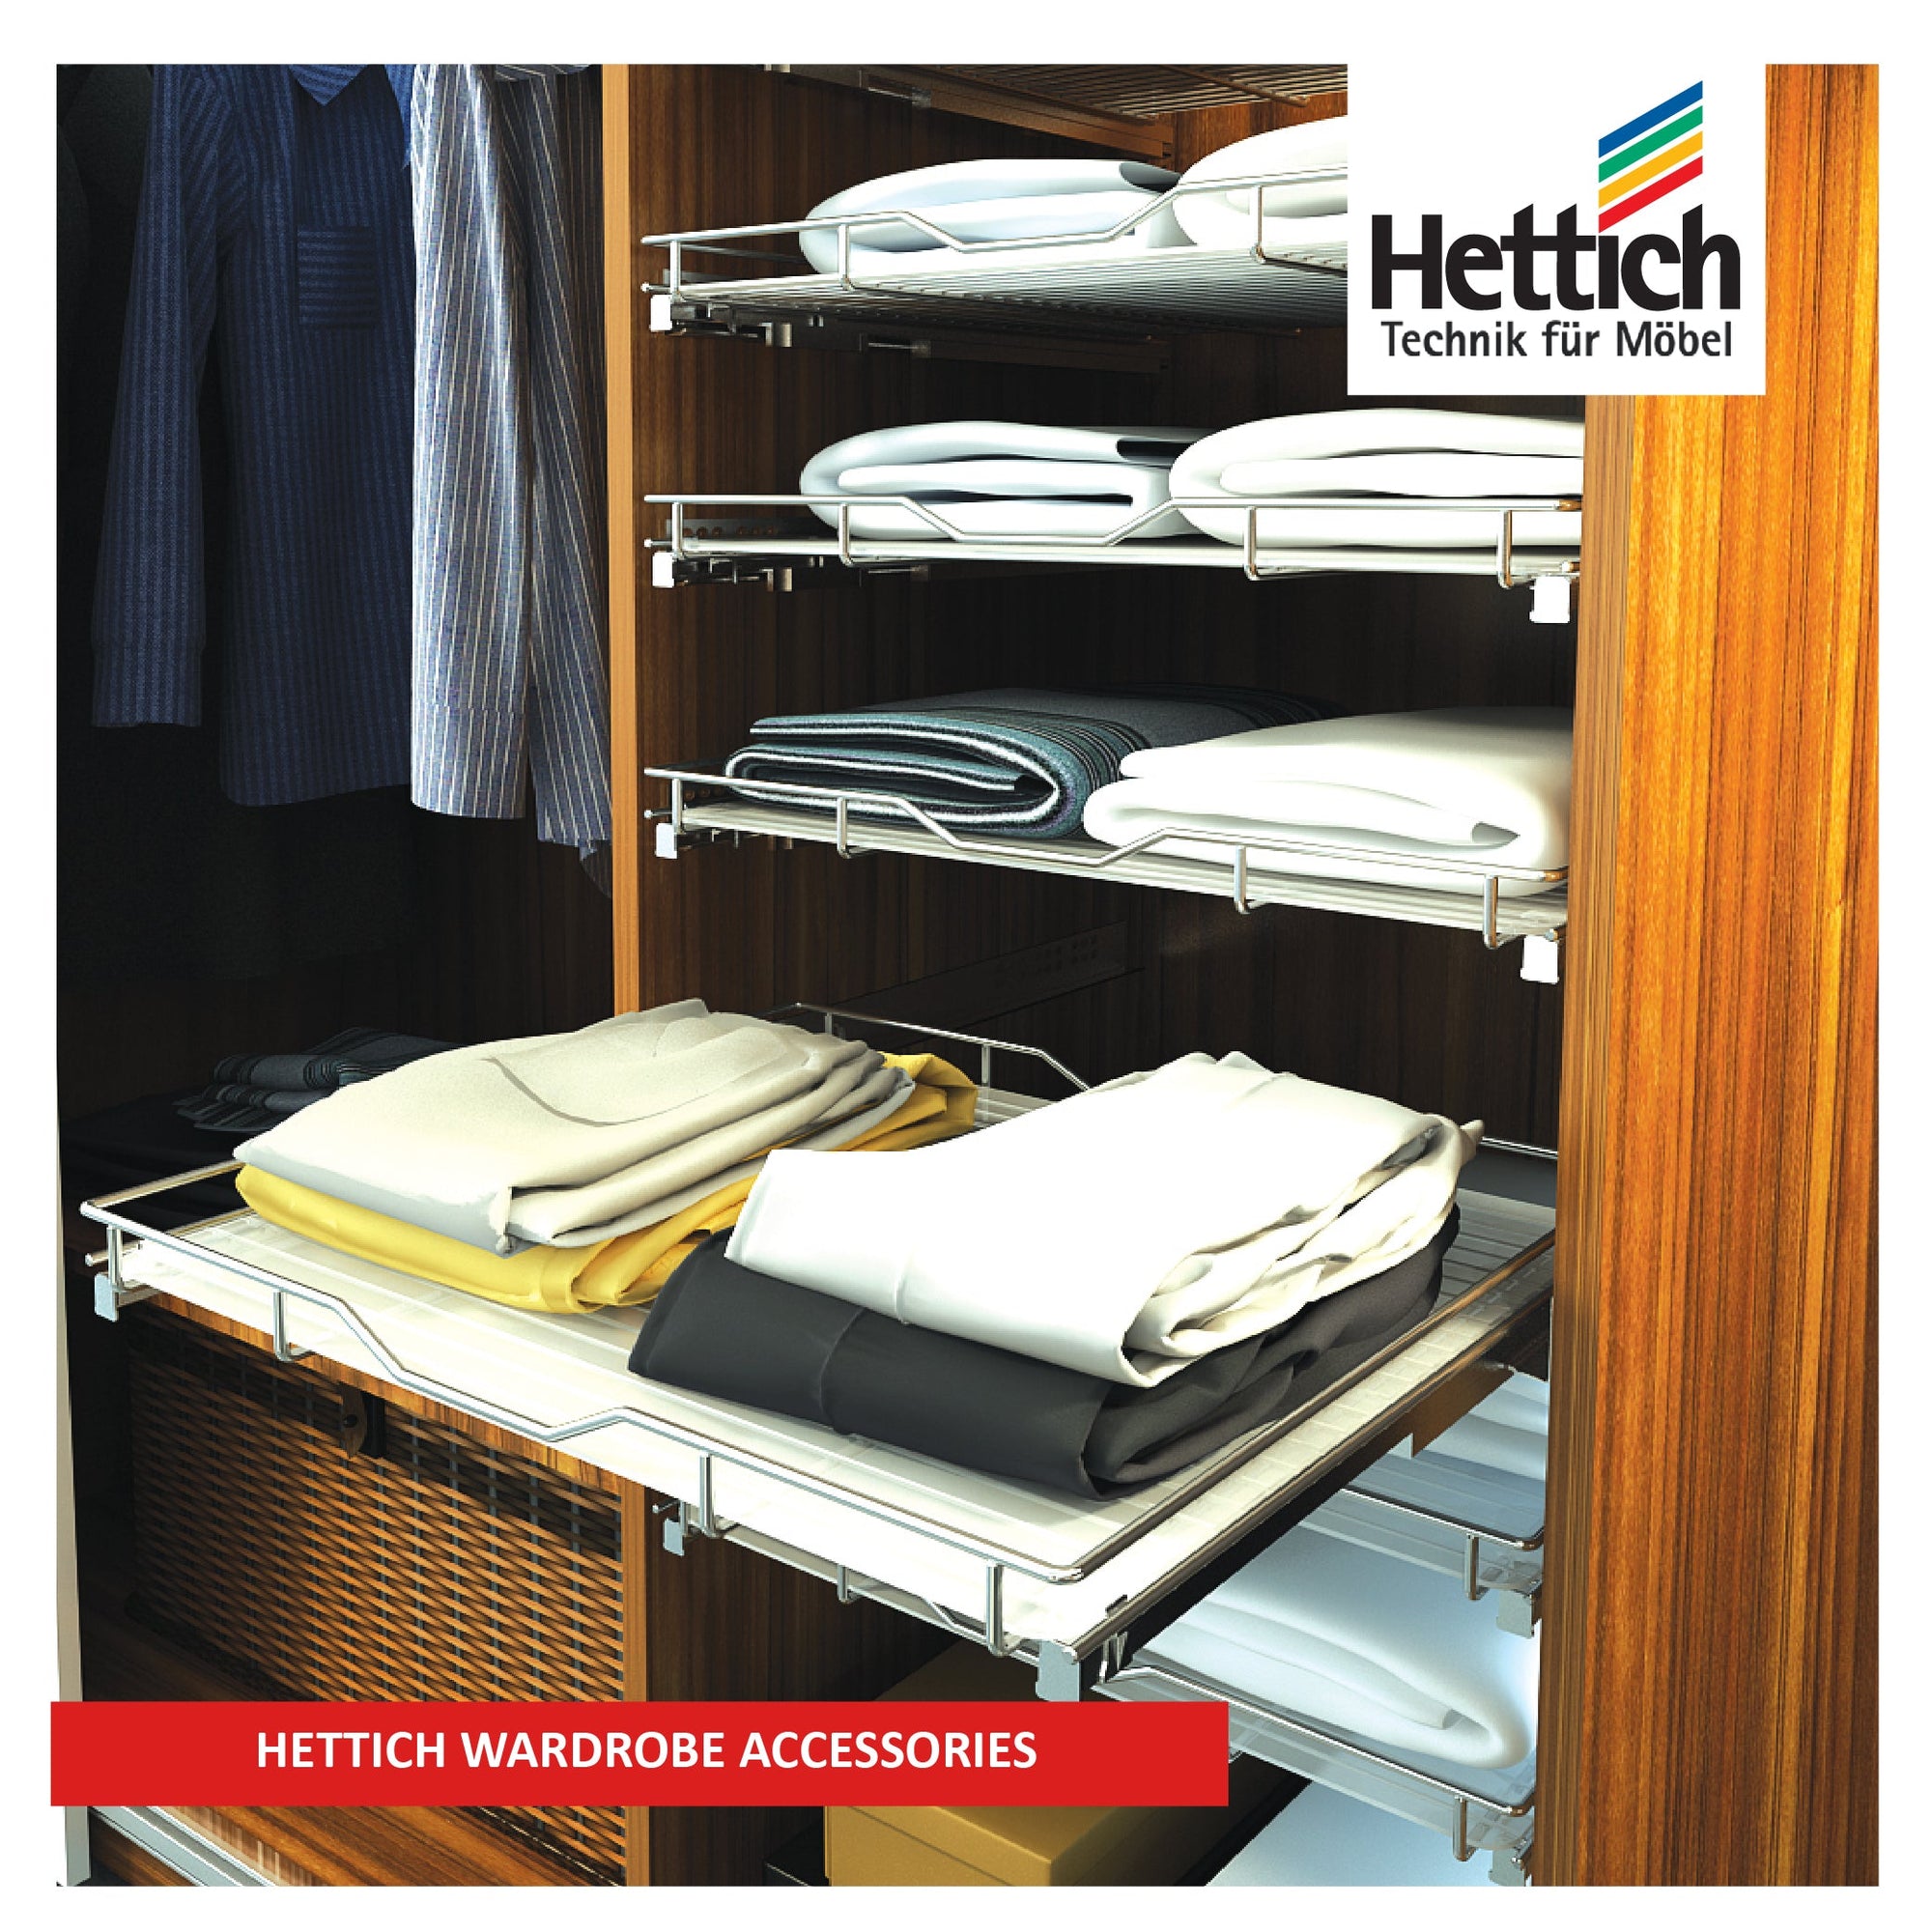 Hettich Wardrobe Accessories - Premium storage solutions for clothes and accessories.